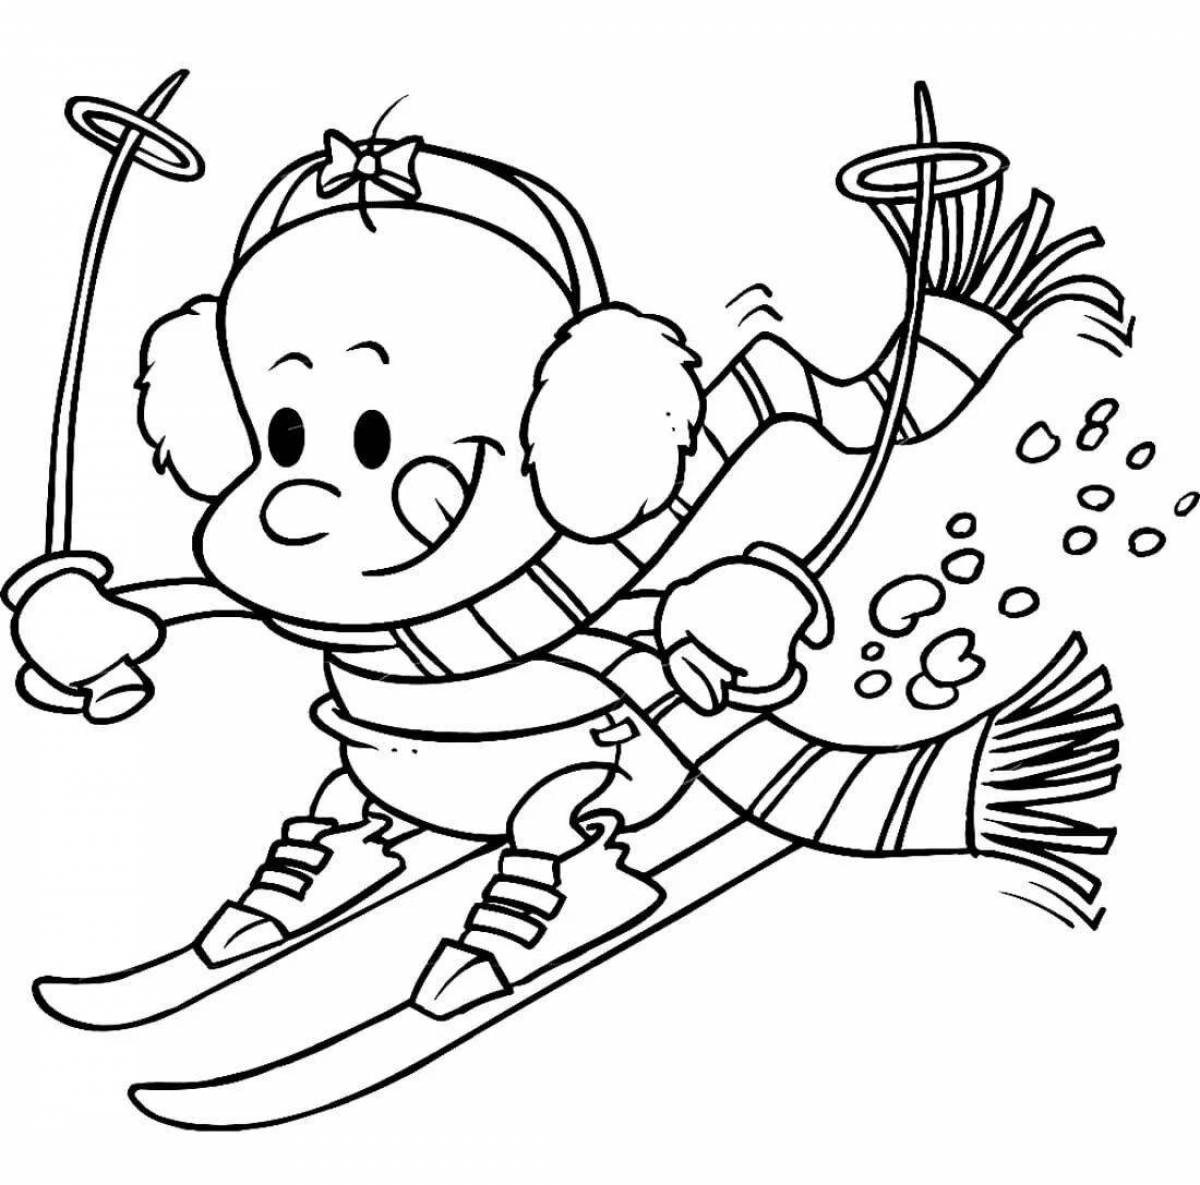 Skier for children 5 6 years old #6